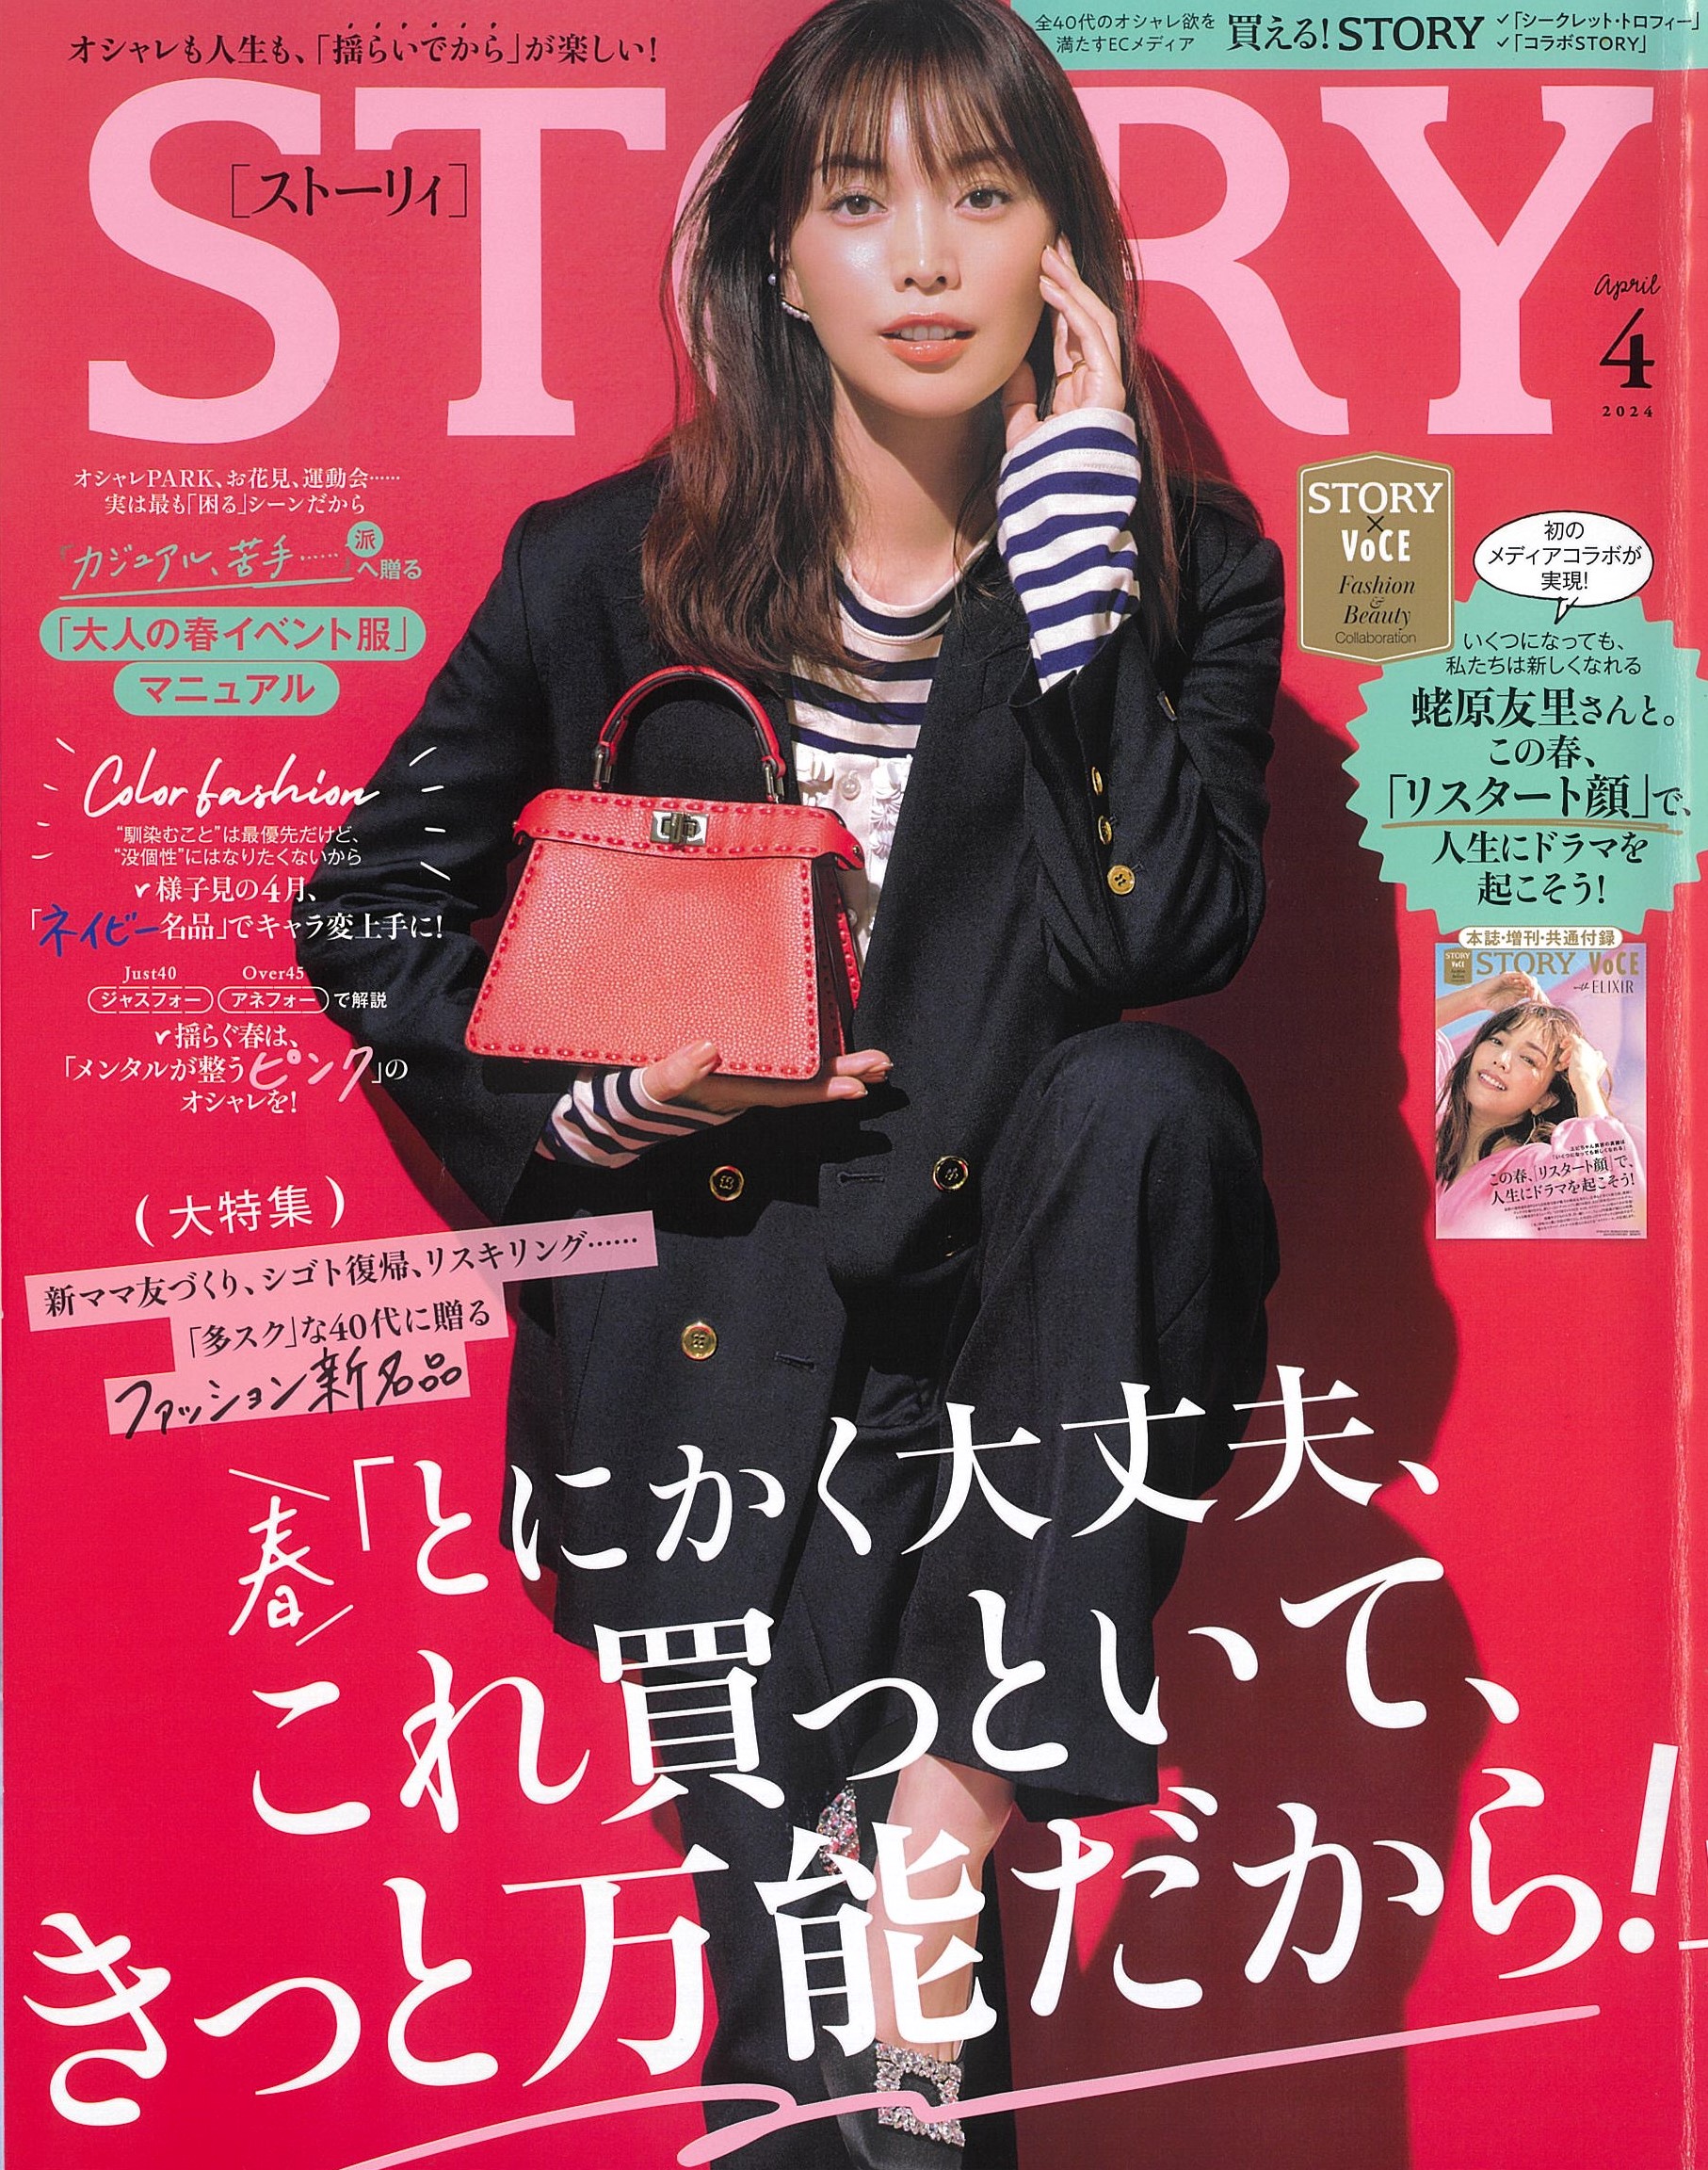 Launer London handbag is introduced in 『STORY』 magazine.